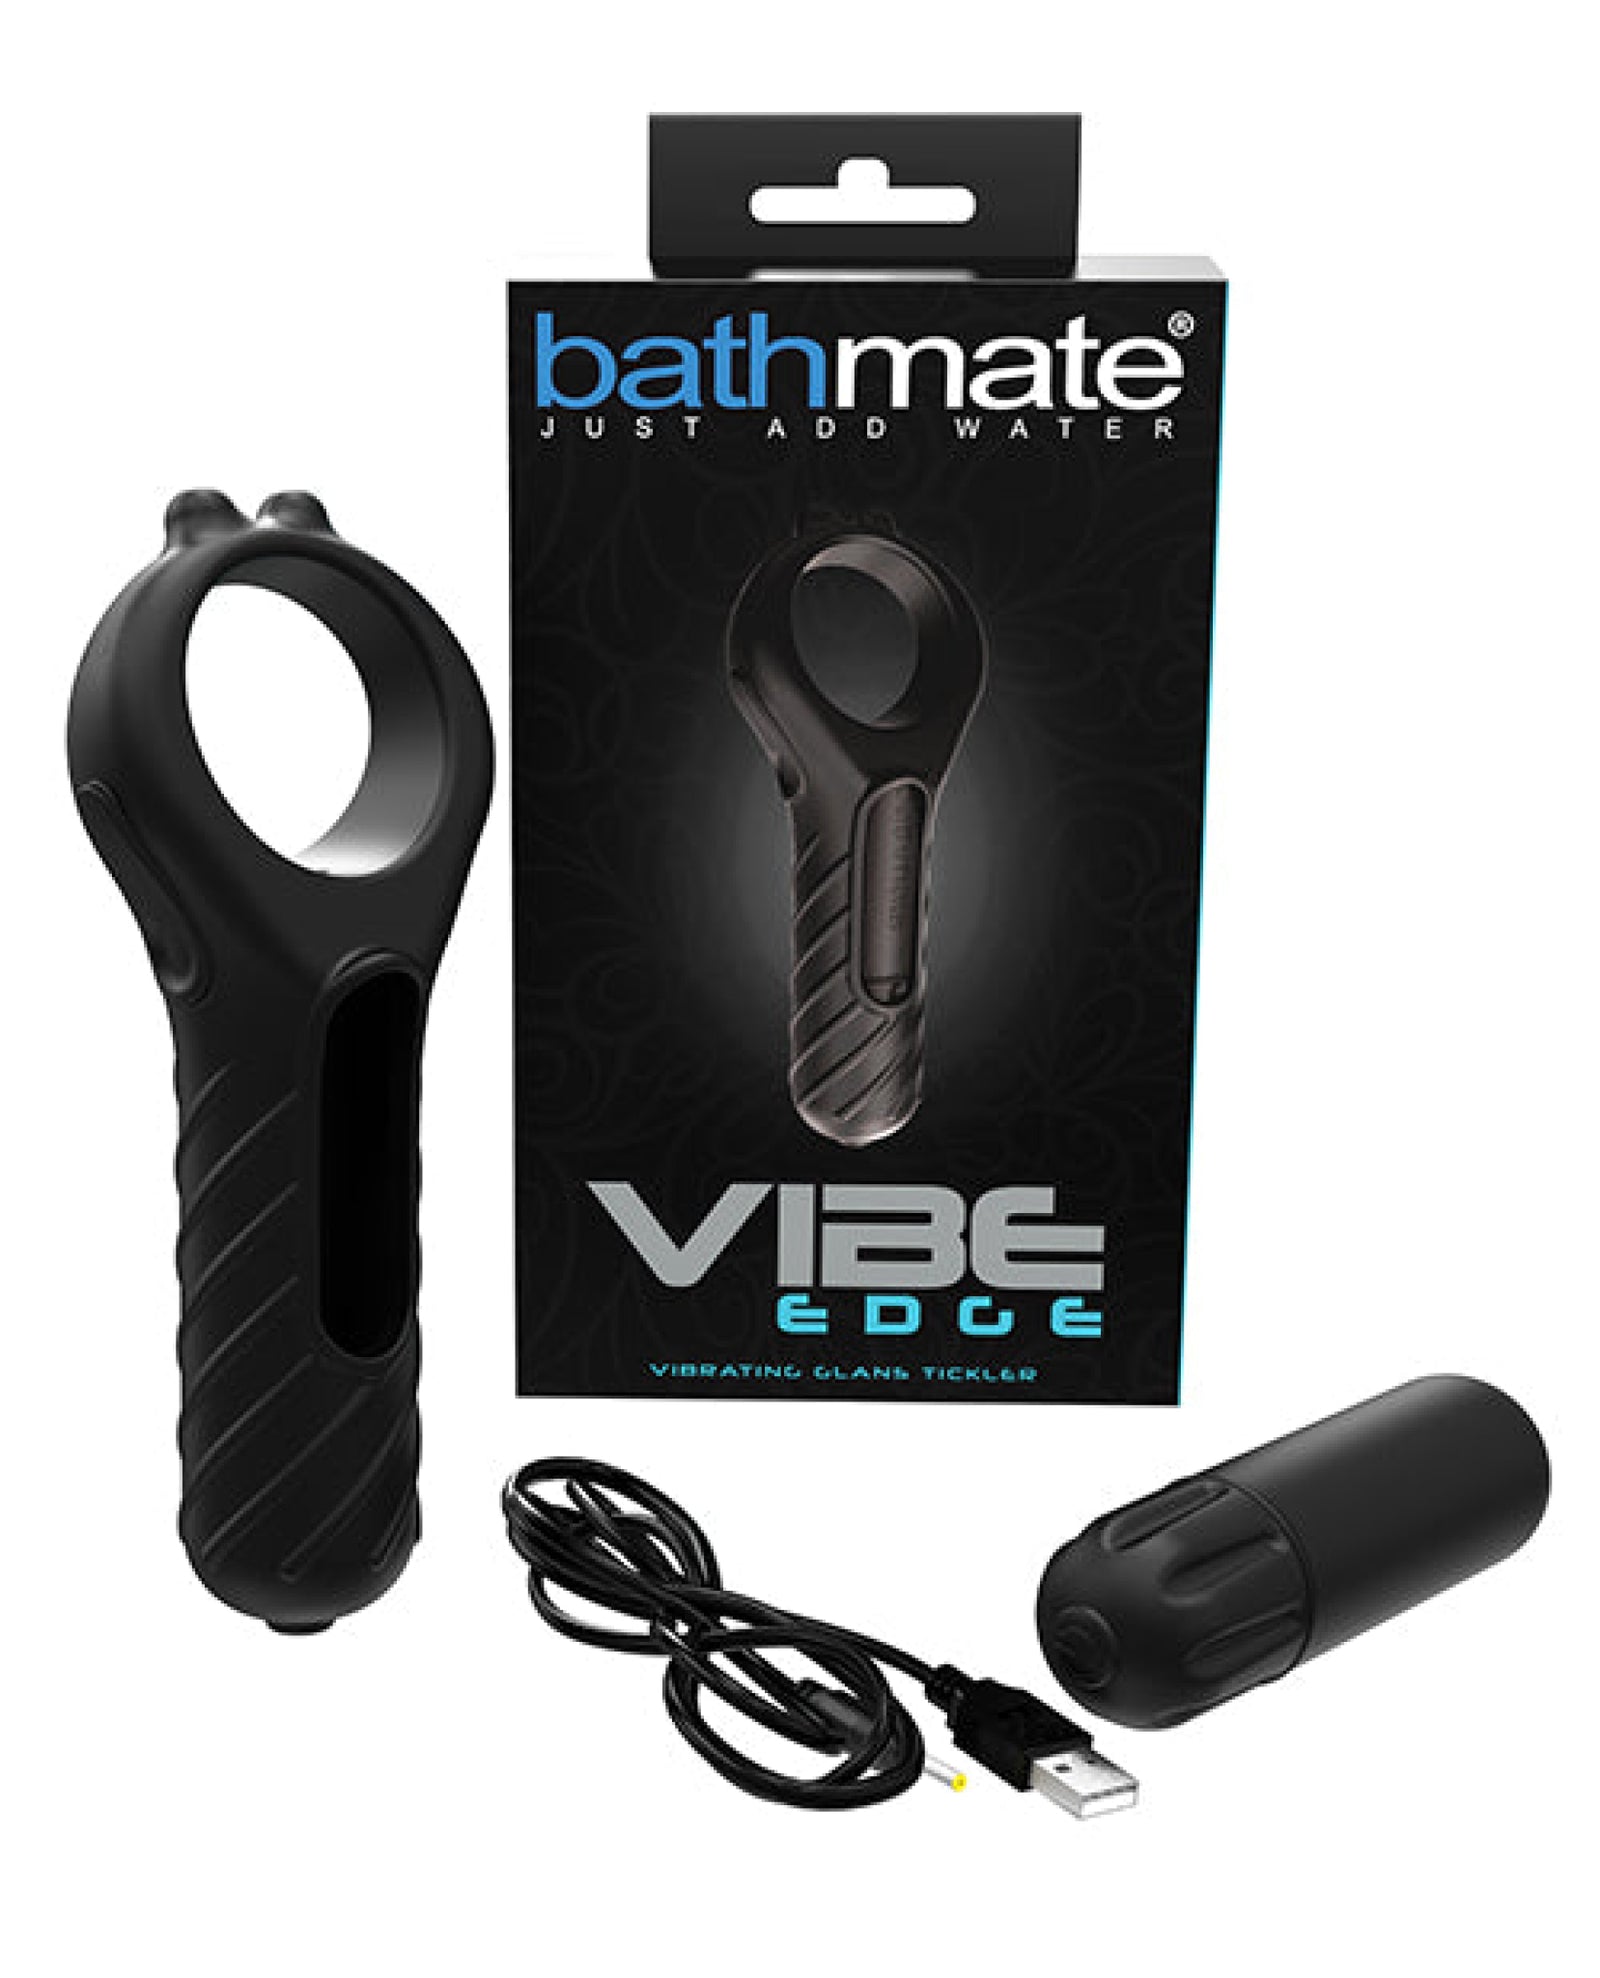 Bathmate Vibe Edge Glans Tickler - Black Bathmate®